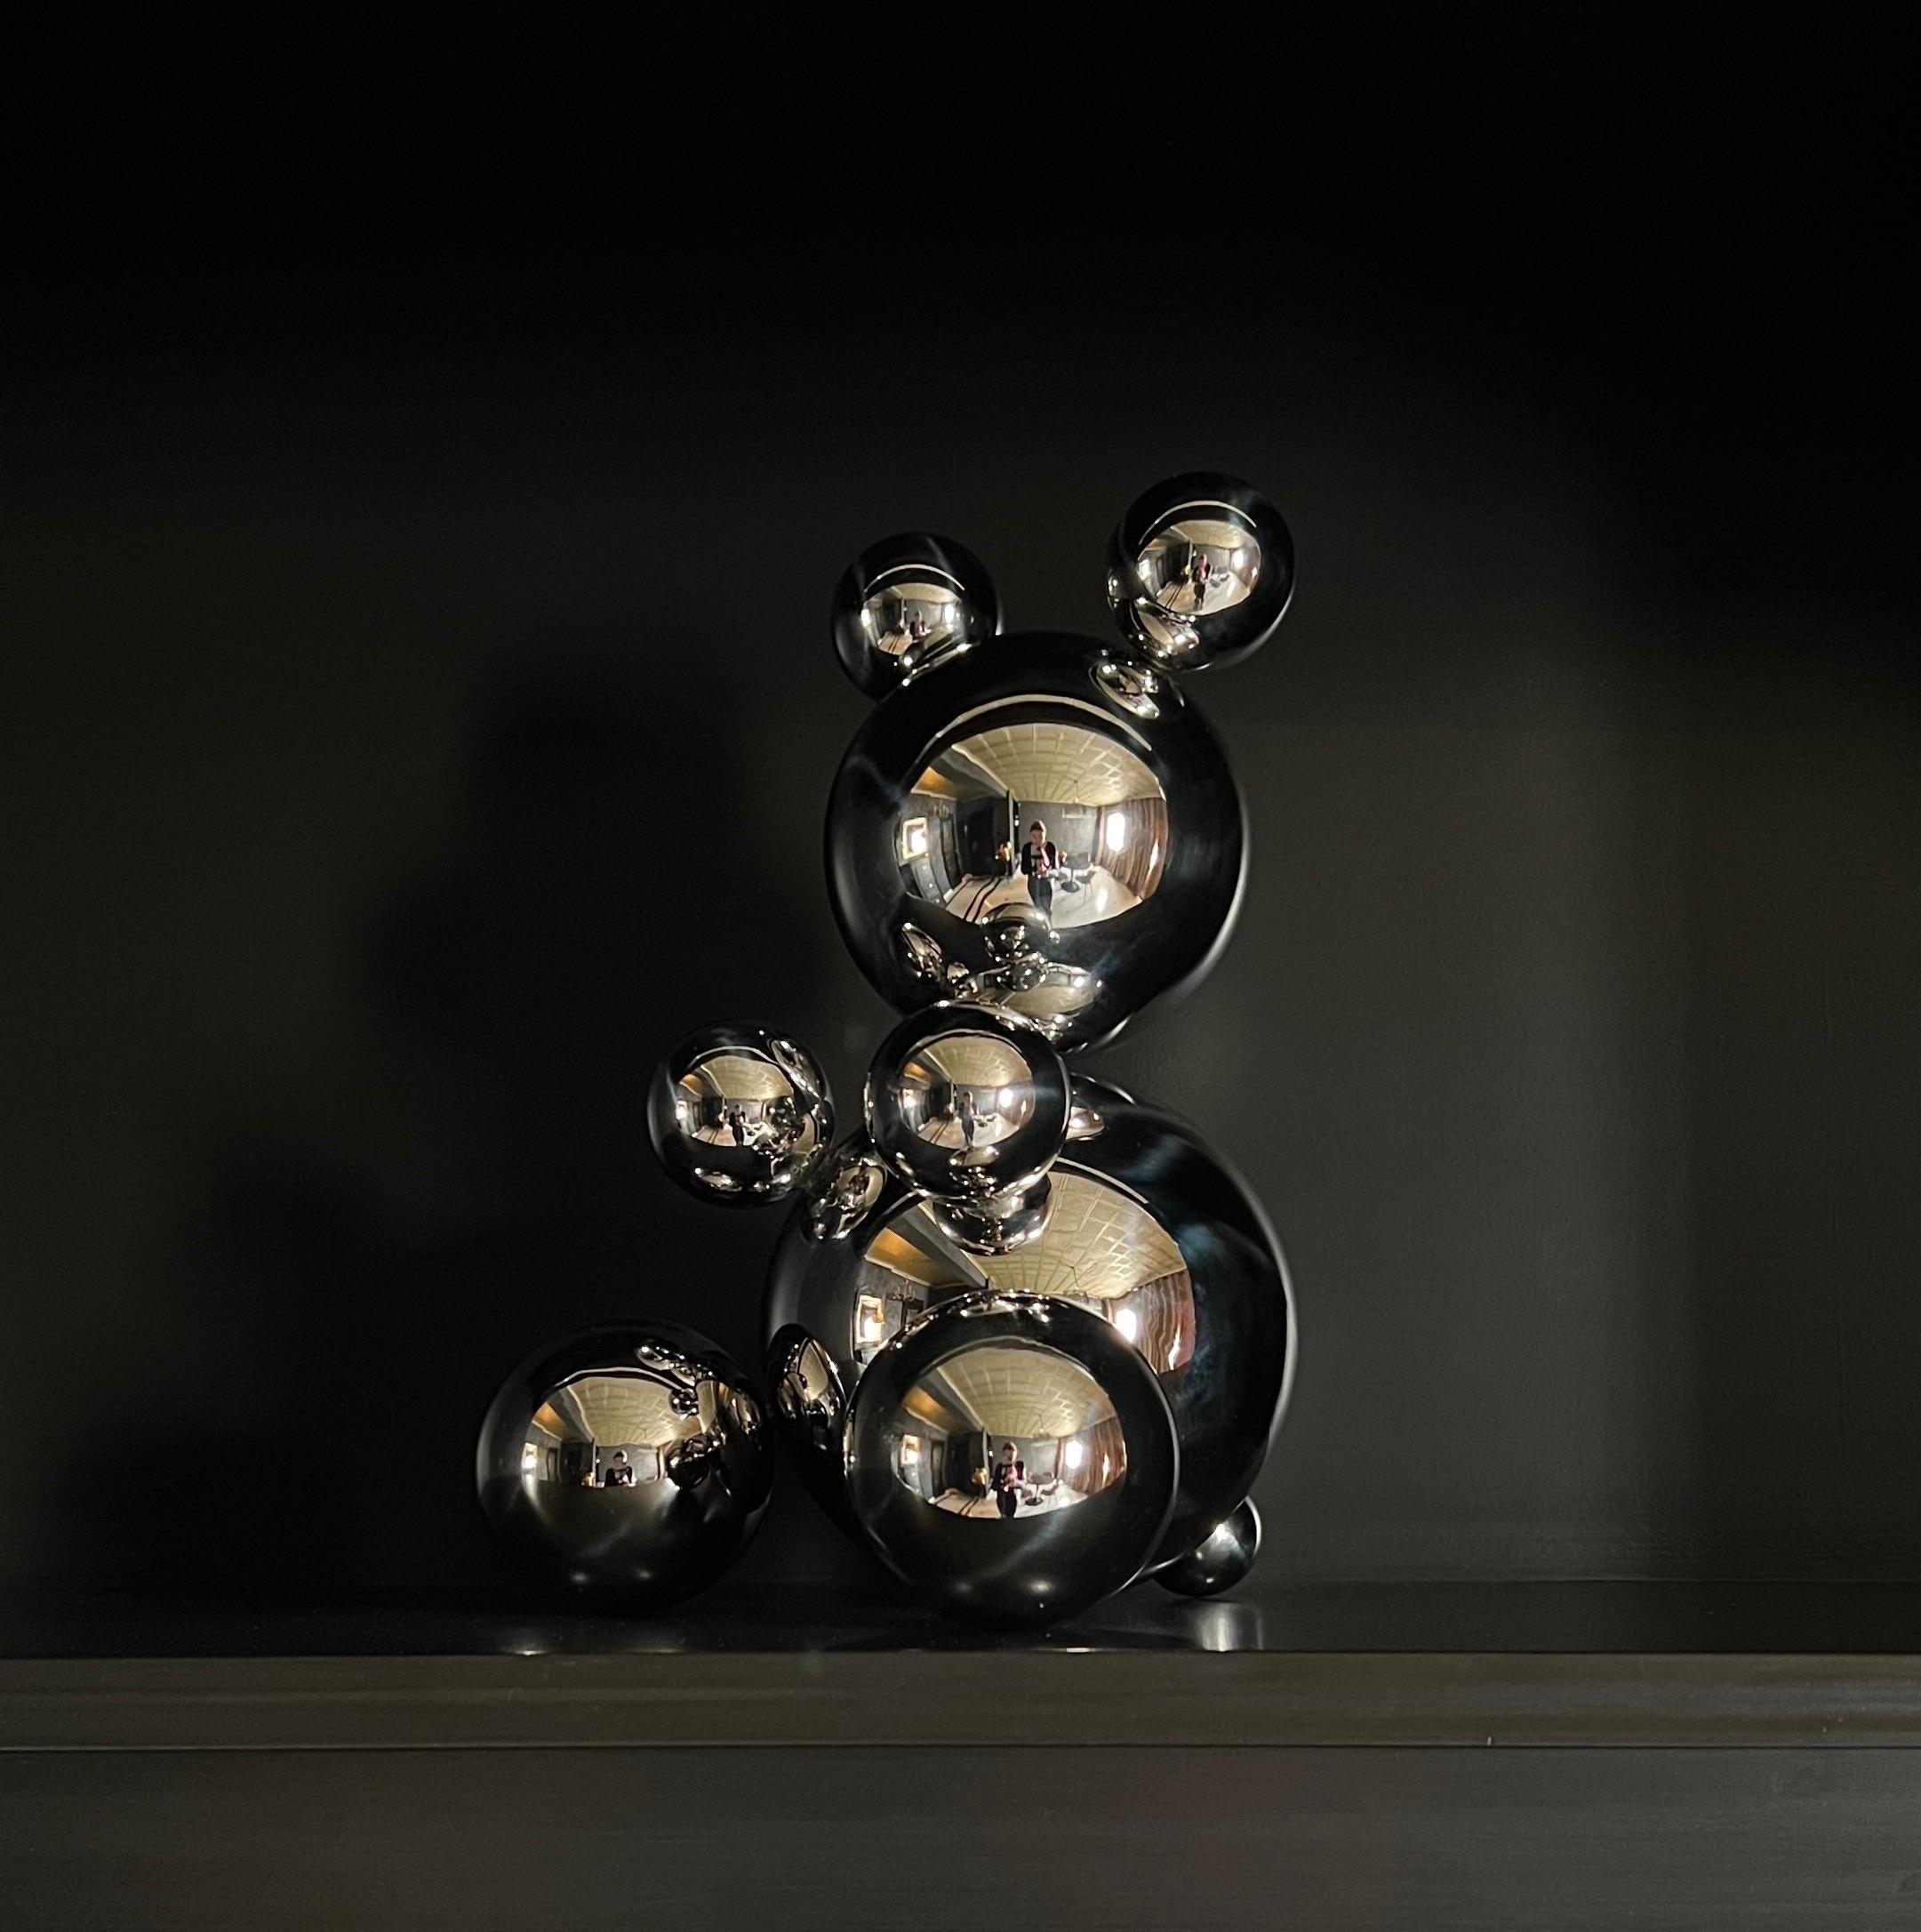 Middle Stainless Steel Bear 'Oscar' Sculpture Minimalistic Animal 5